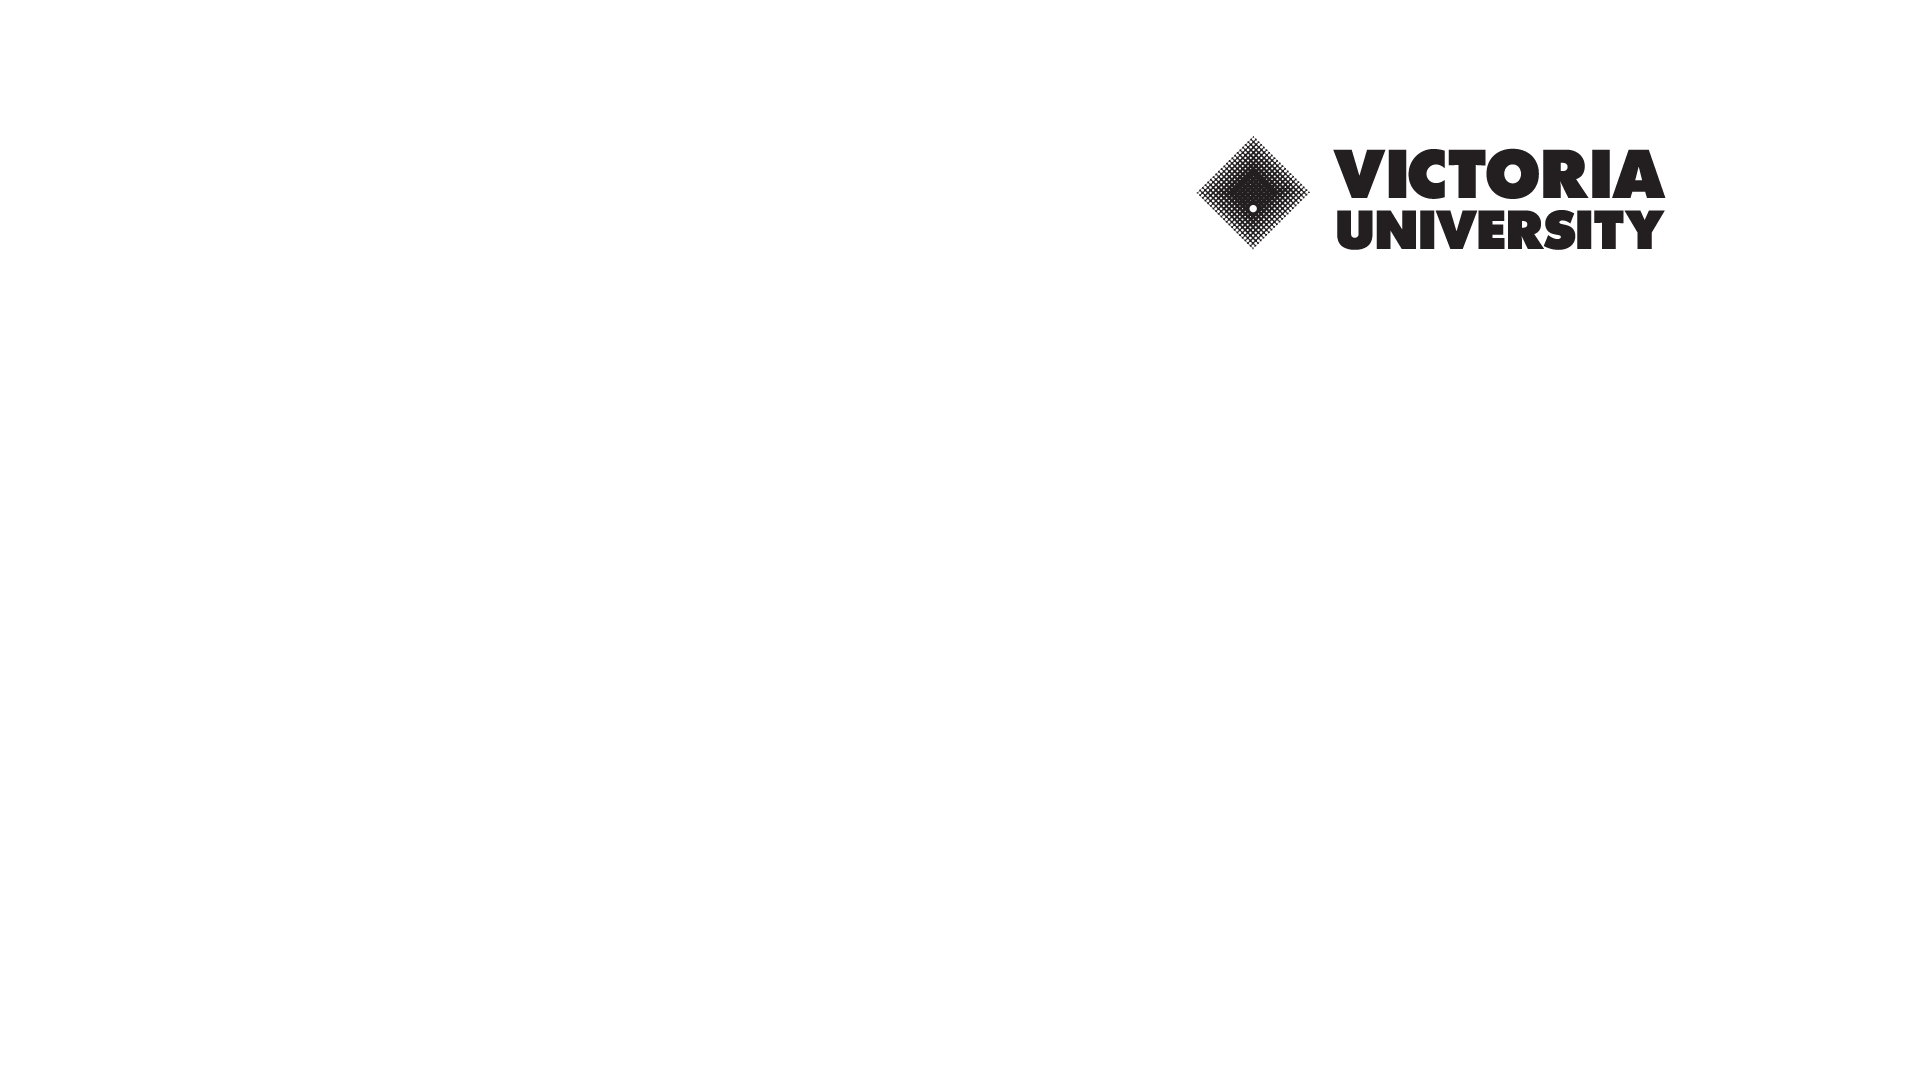 Zoom Virtual Background with Victoria University logo